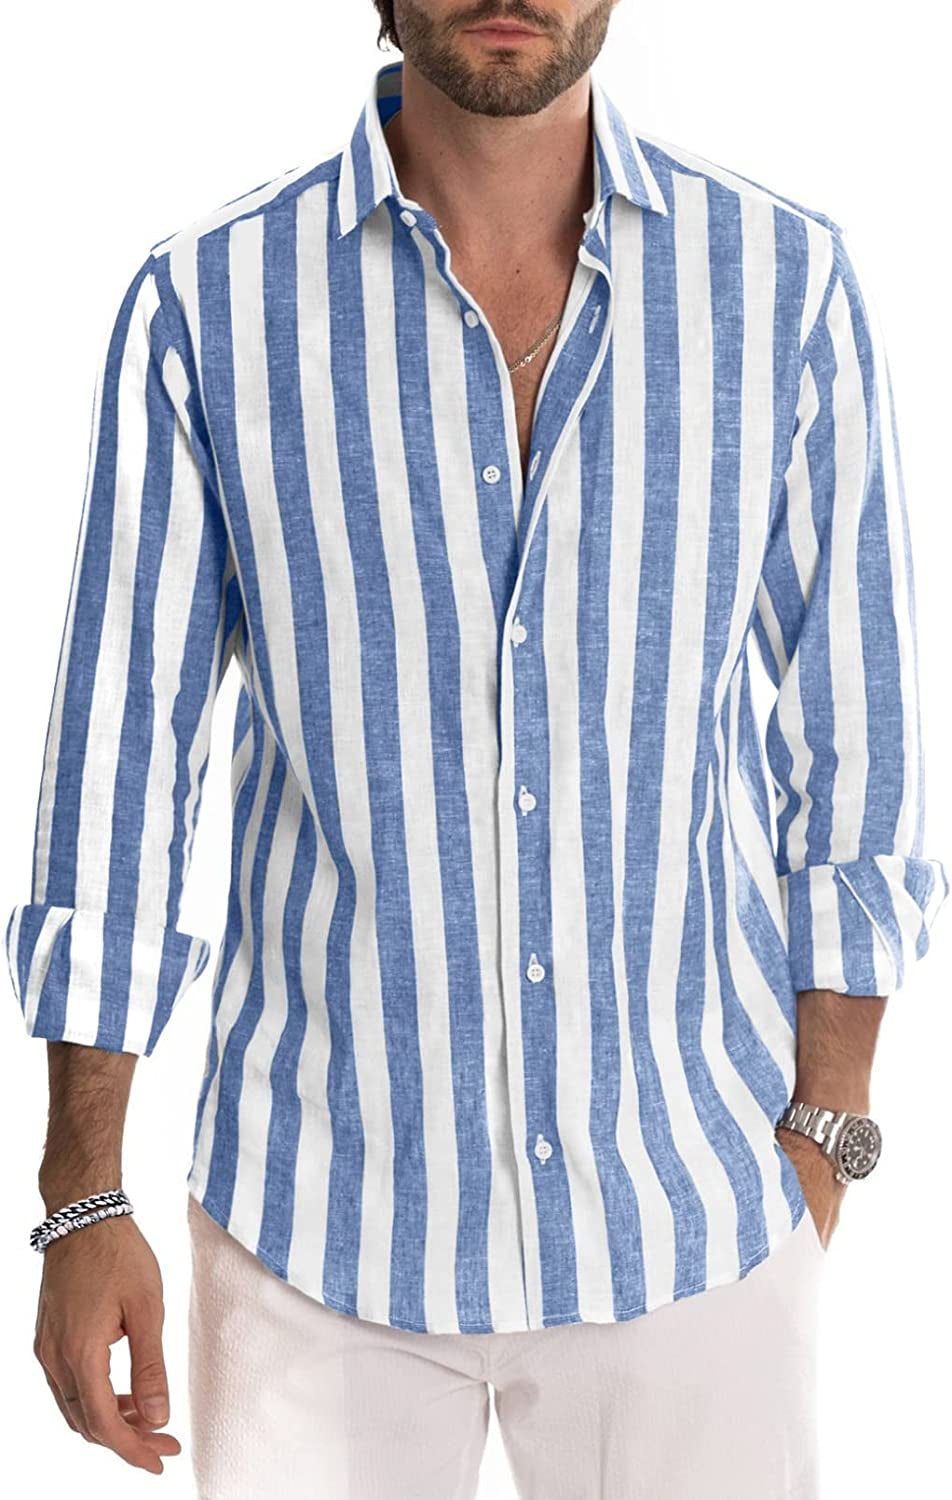 Men'S Casual Long Sleeve Button-Down Shirts Striped Dress Shirts Cotton Shirt